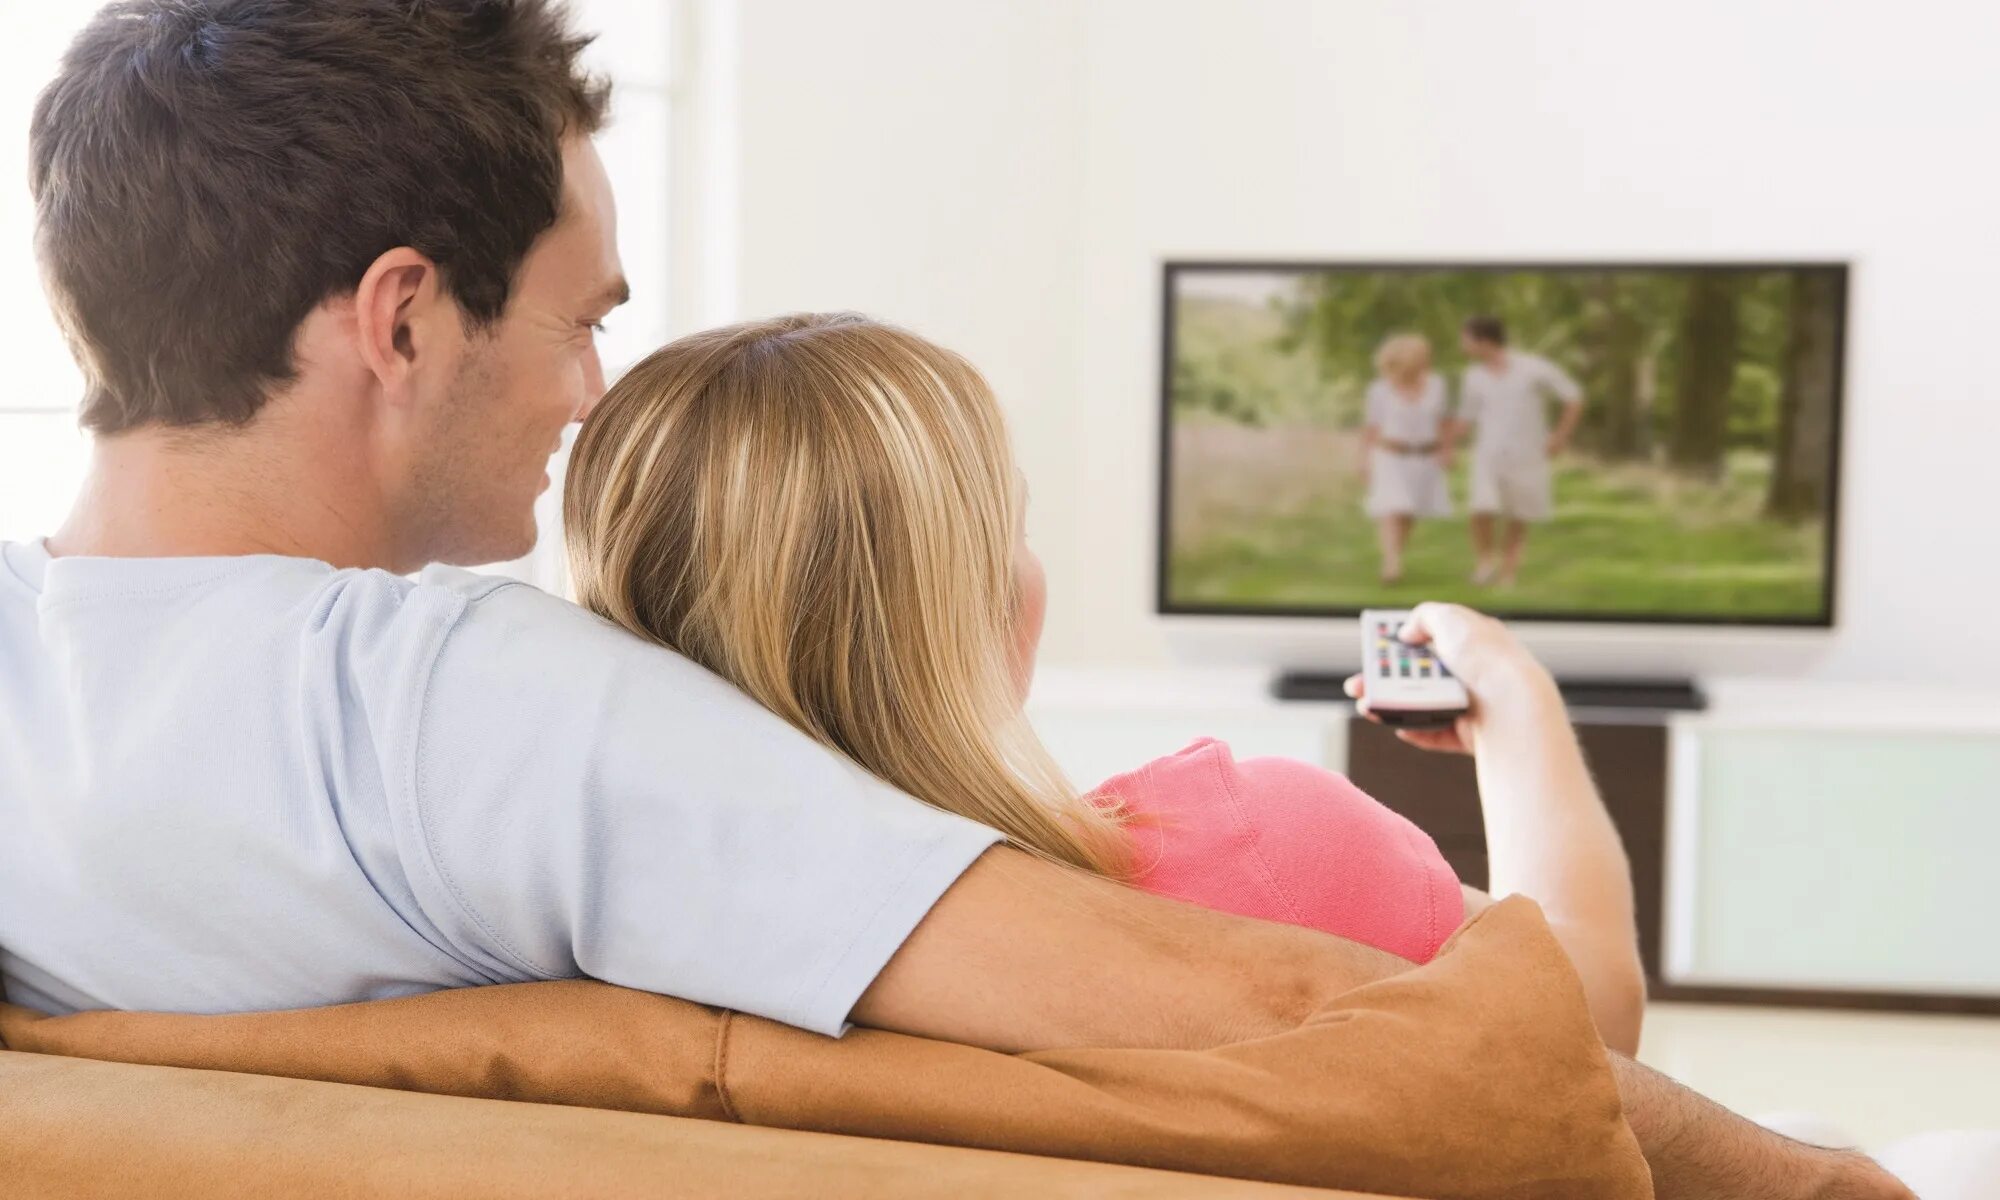 Пока муж смотрит телевизор жена. Человек телевизор. Человек перед телевизором. Пара перед телевизором. Пара на диване перед телевизором.